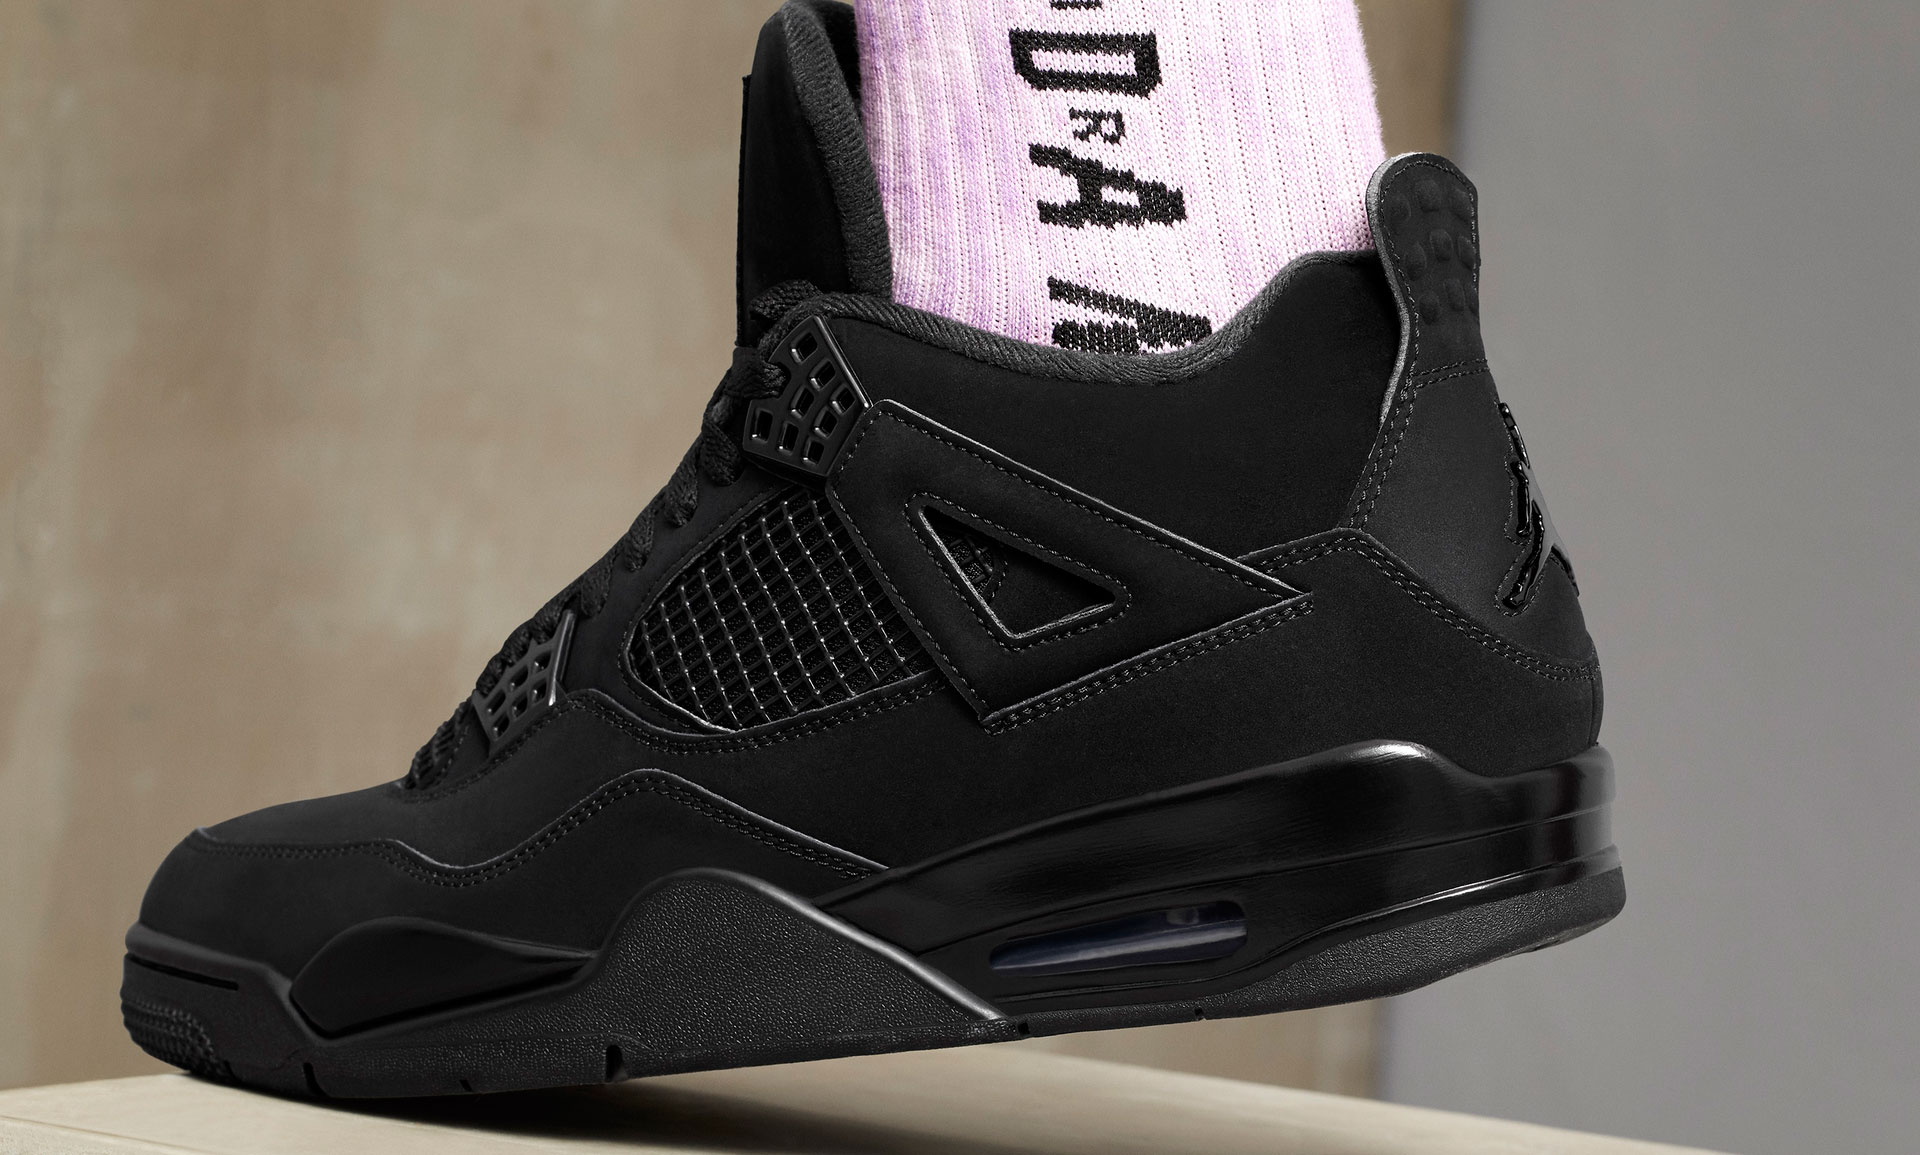 Air Jordan 4 Black Cat 2020 Apparel Match | SneakerFits.com